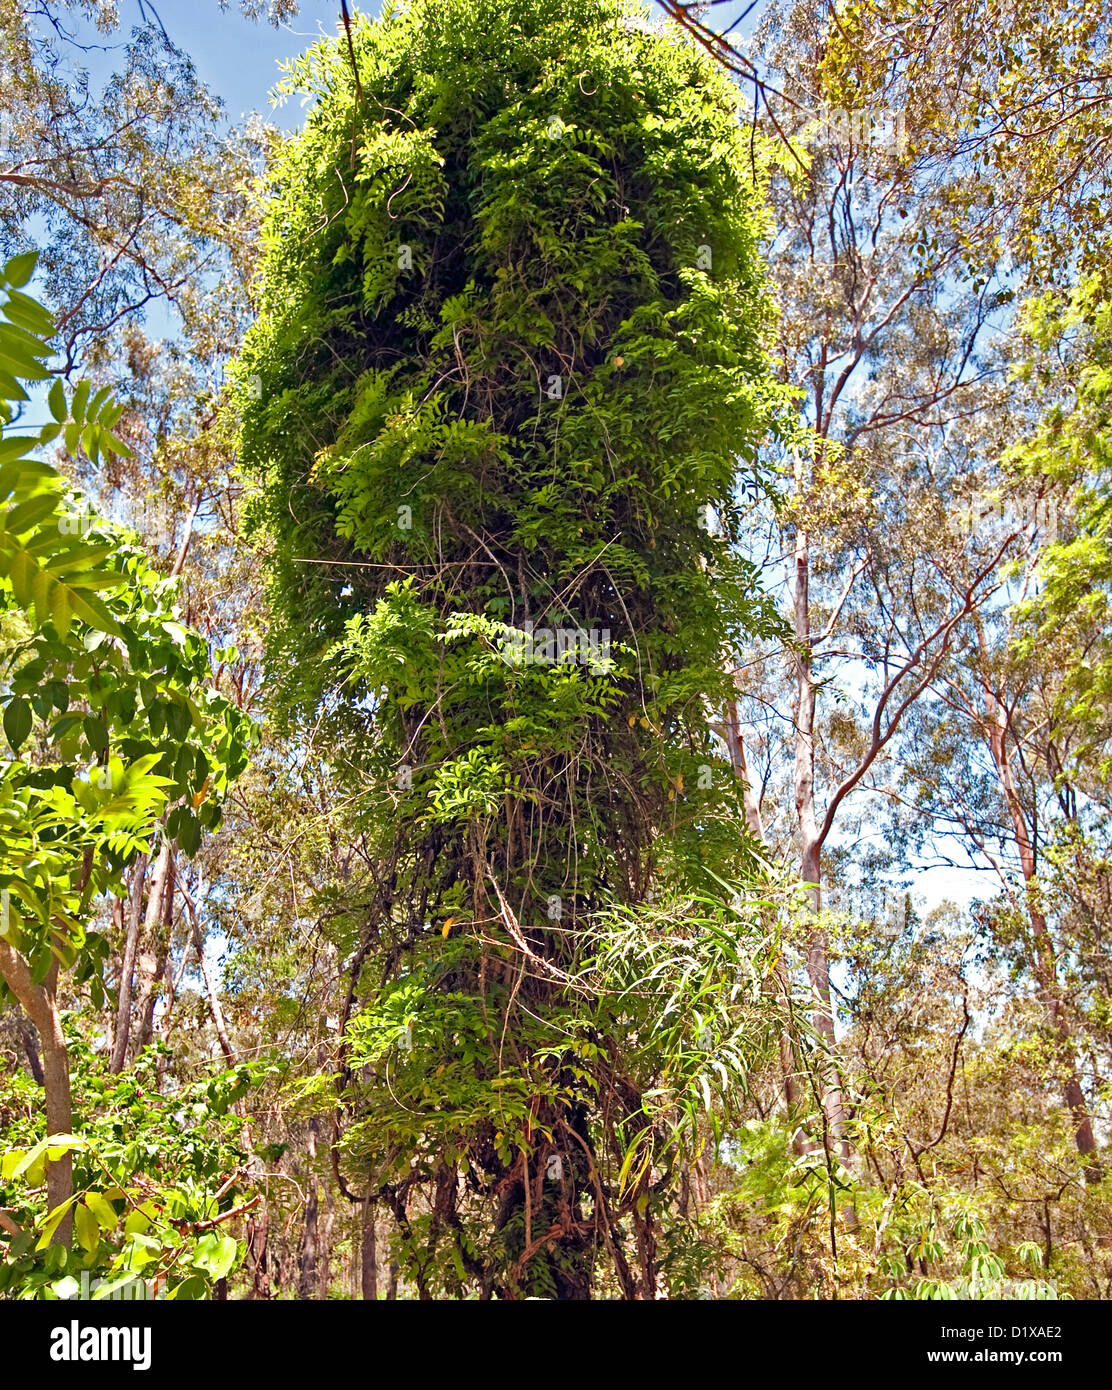 Callerya megasperma syn Milletia - an Australian native vine in a forest Stock Photo